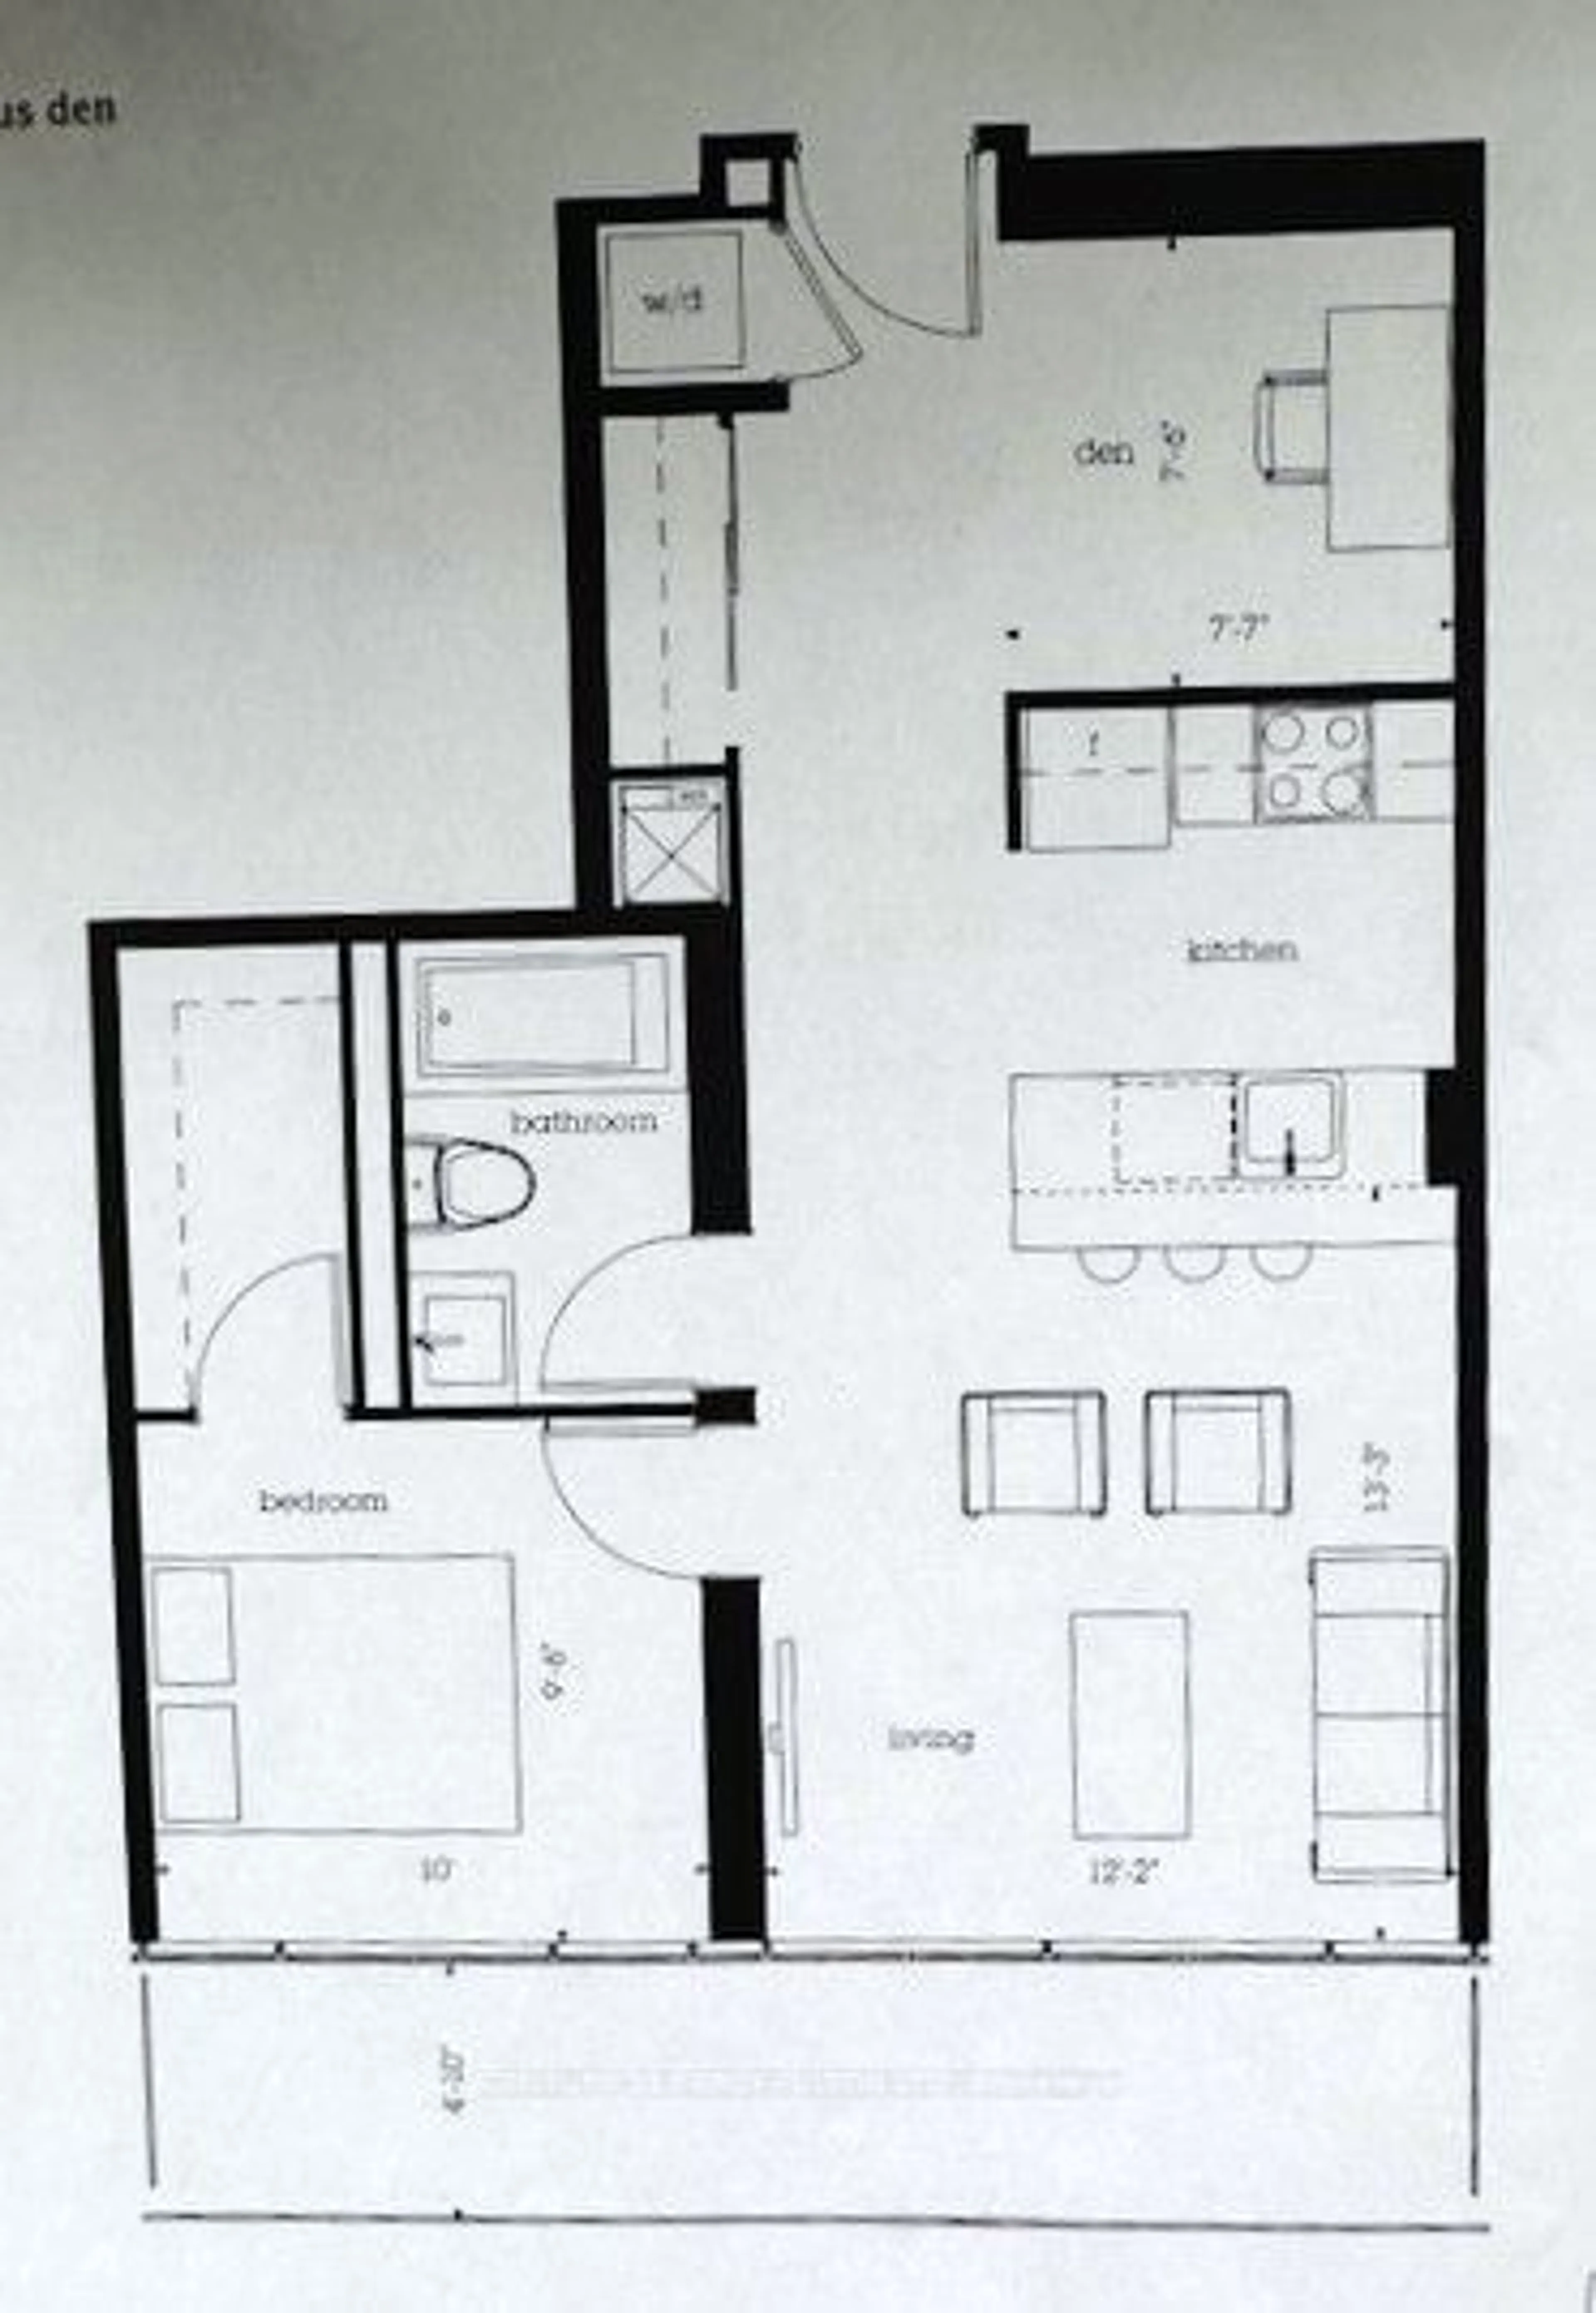 Floor plan for 1815 Yonge St #1001, Toronto Ontario M4T 2A4